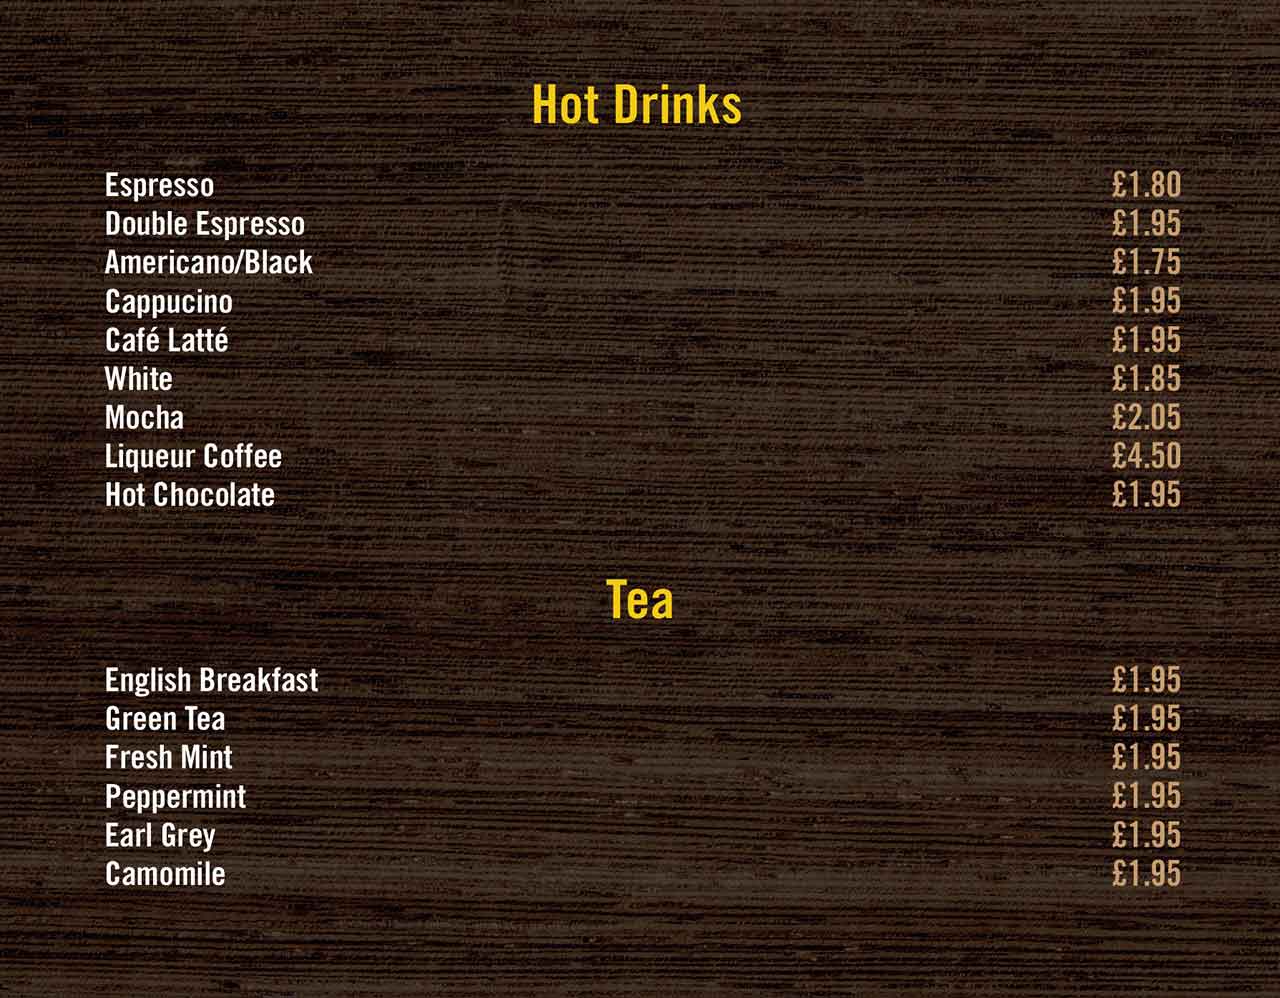 Hot Drinks & Tea